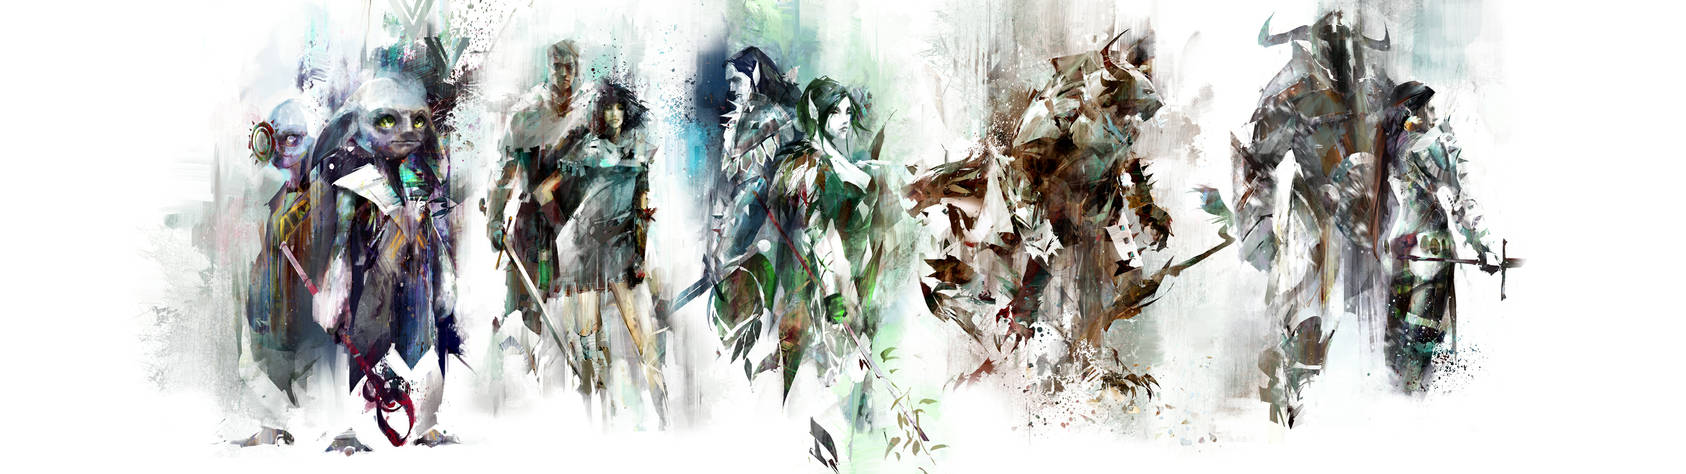 Guild Wars 2 Races Wallpaper